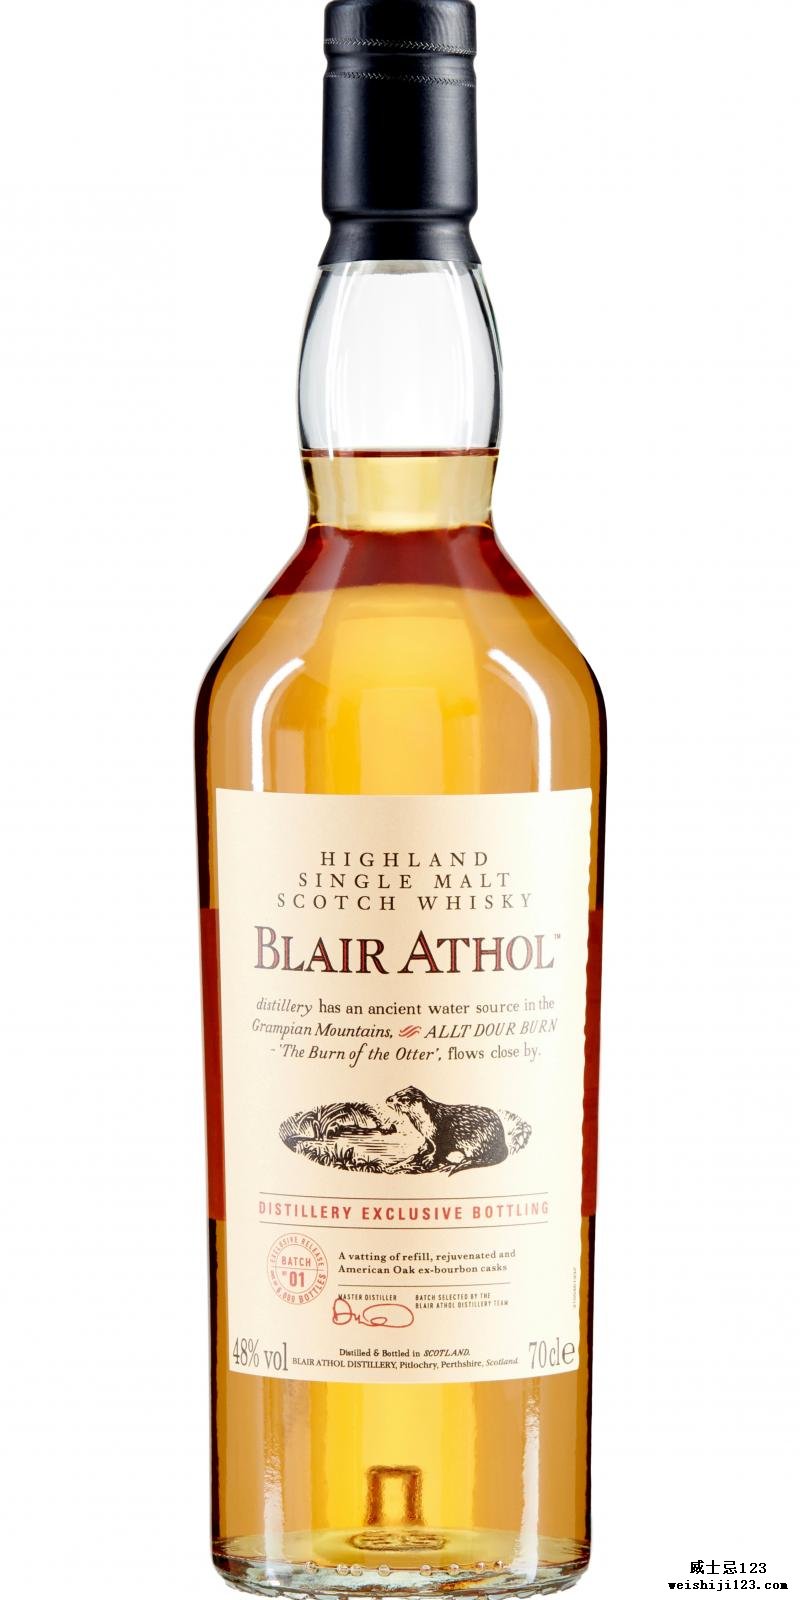 Blair Athol Distillery Exclusive Bottling